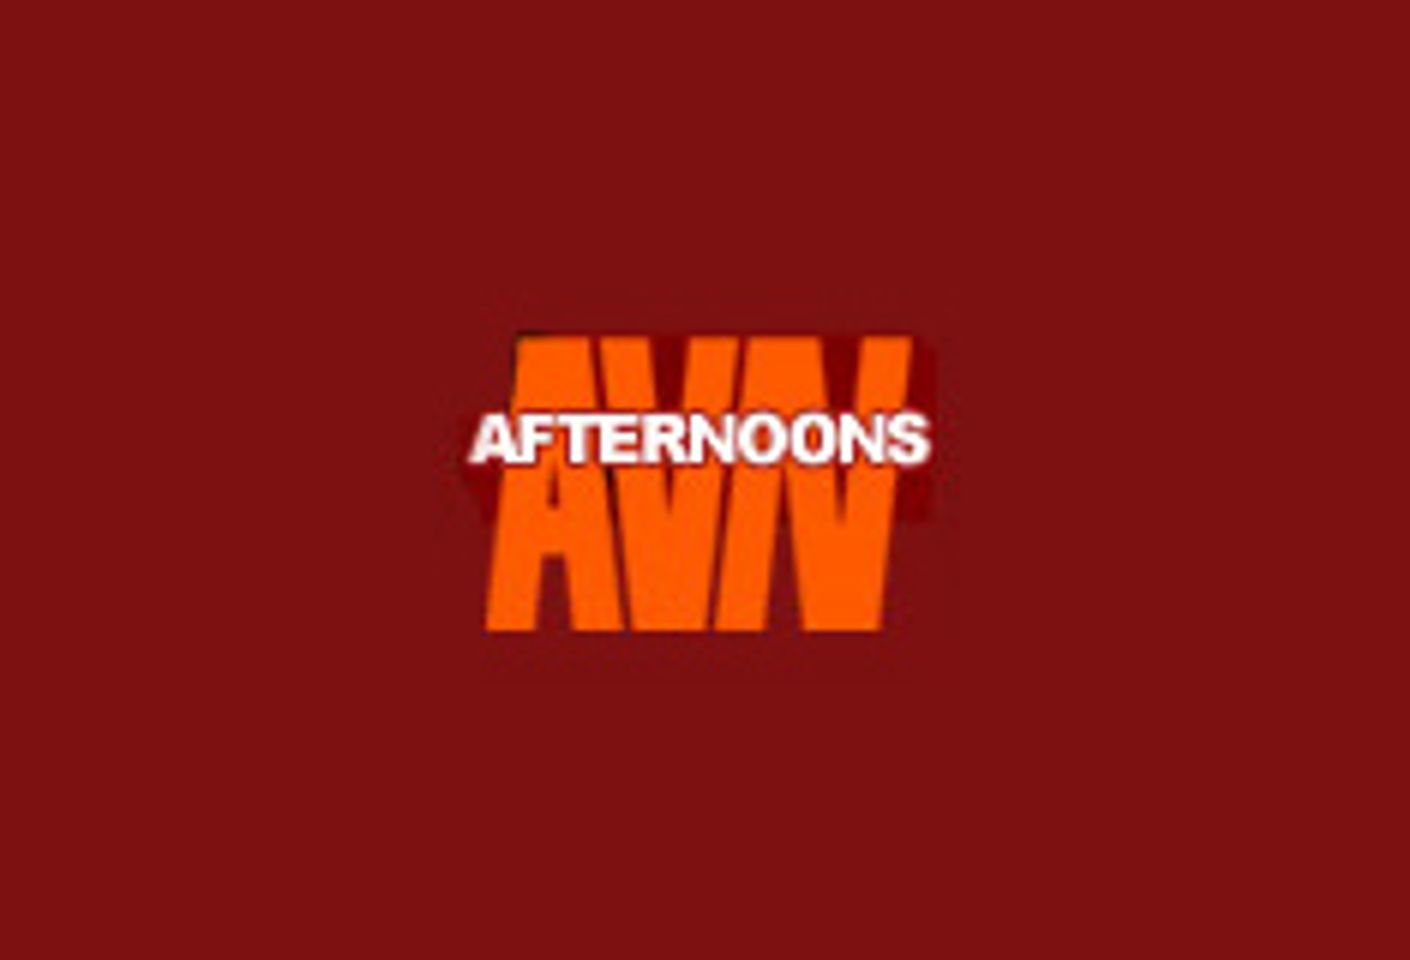 'AVN Afternoons' With Orenstein Rescheduled